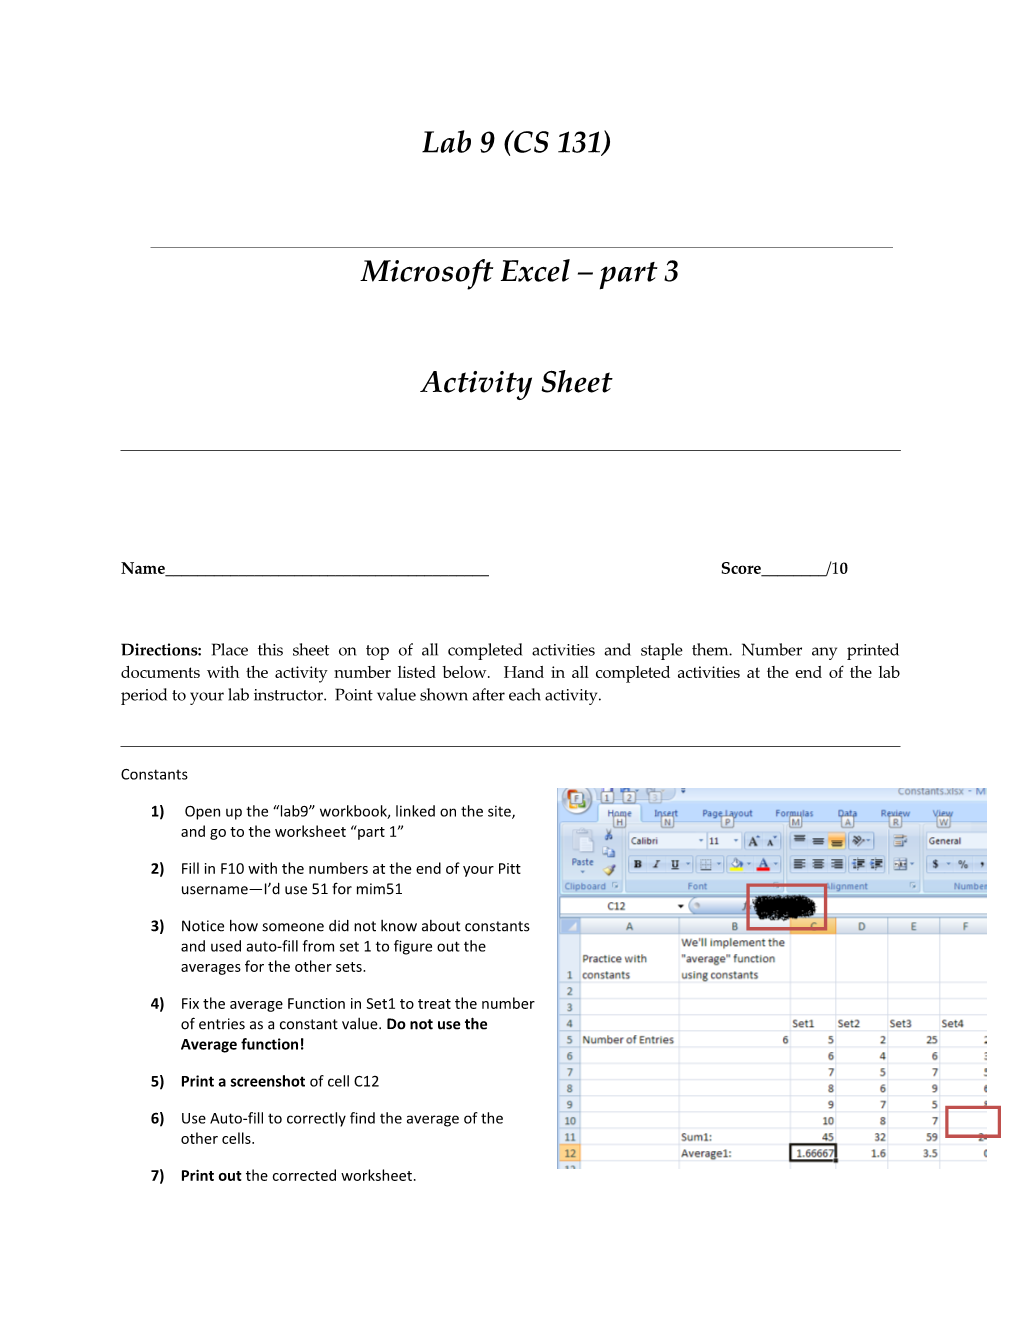 Microsoft Excel Part 3